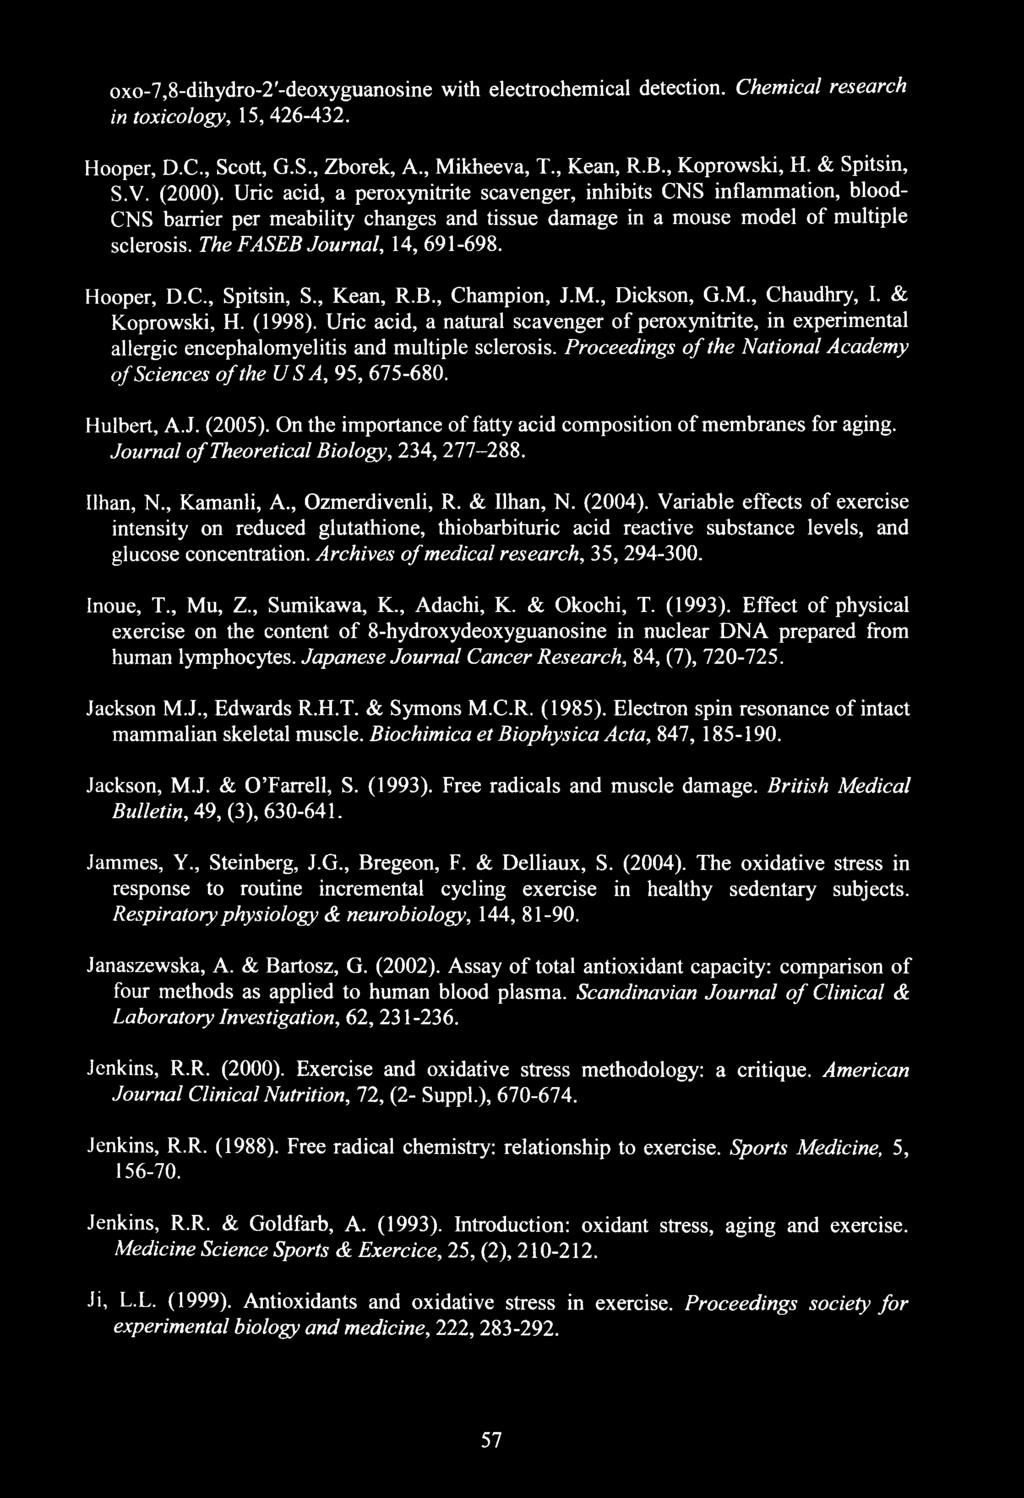 The FASEB Journal, 14, 691-698. Hooper, D.C., Spitsin, S., Kean, R.B., Champion, J.M., Dickson, G.M., Chaudhry, I. & Koprowski, H. (1998).